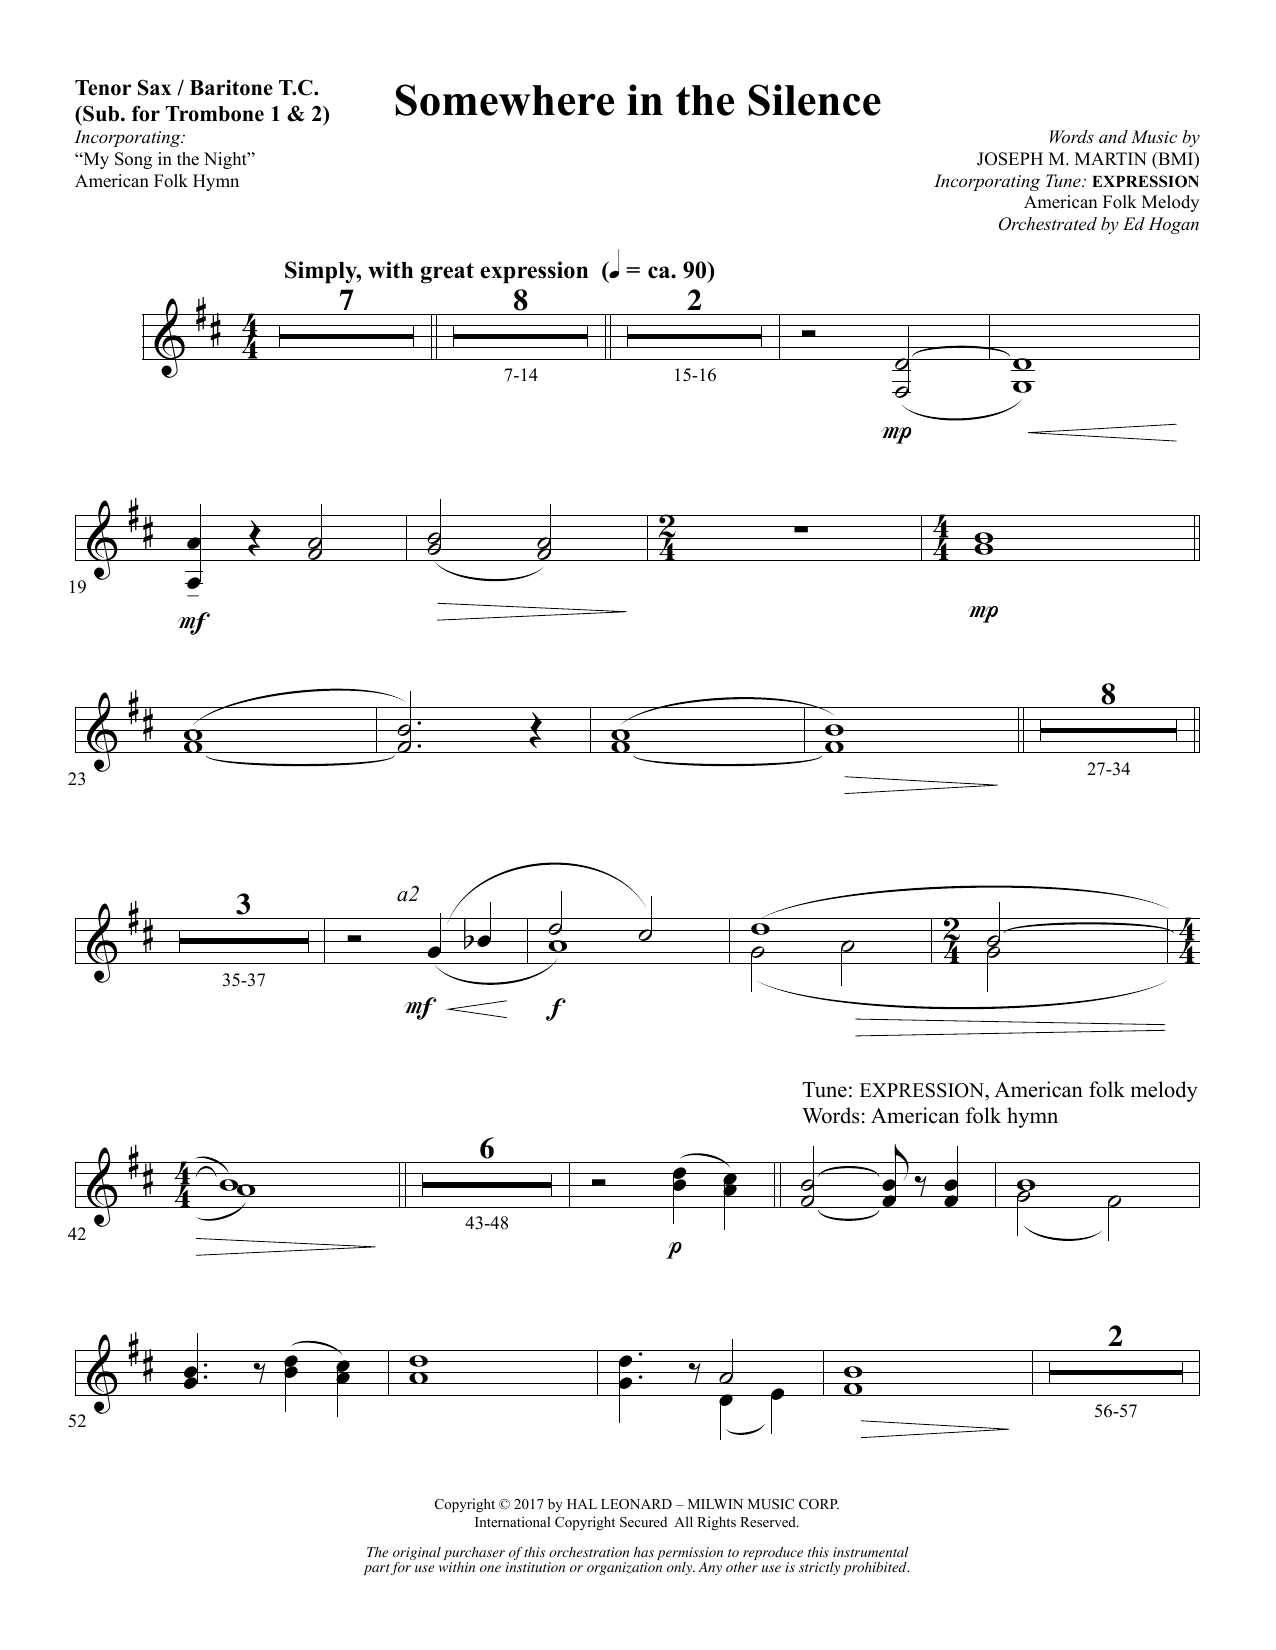 Joseph M. Martin Somewhere in the Silence - Tenor Sax/BariTC (sub Tbn 1-2) sheet music notes and chords arranged for Choir Instrumental Pak